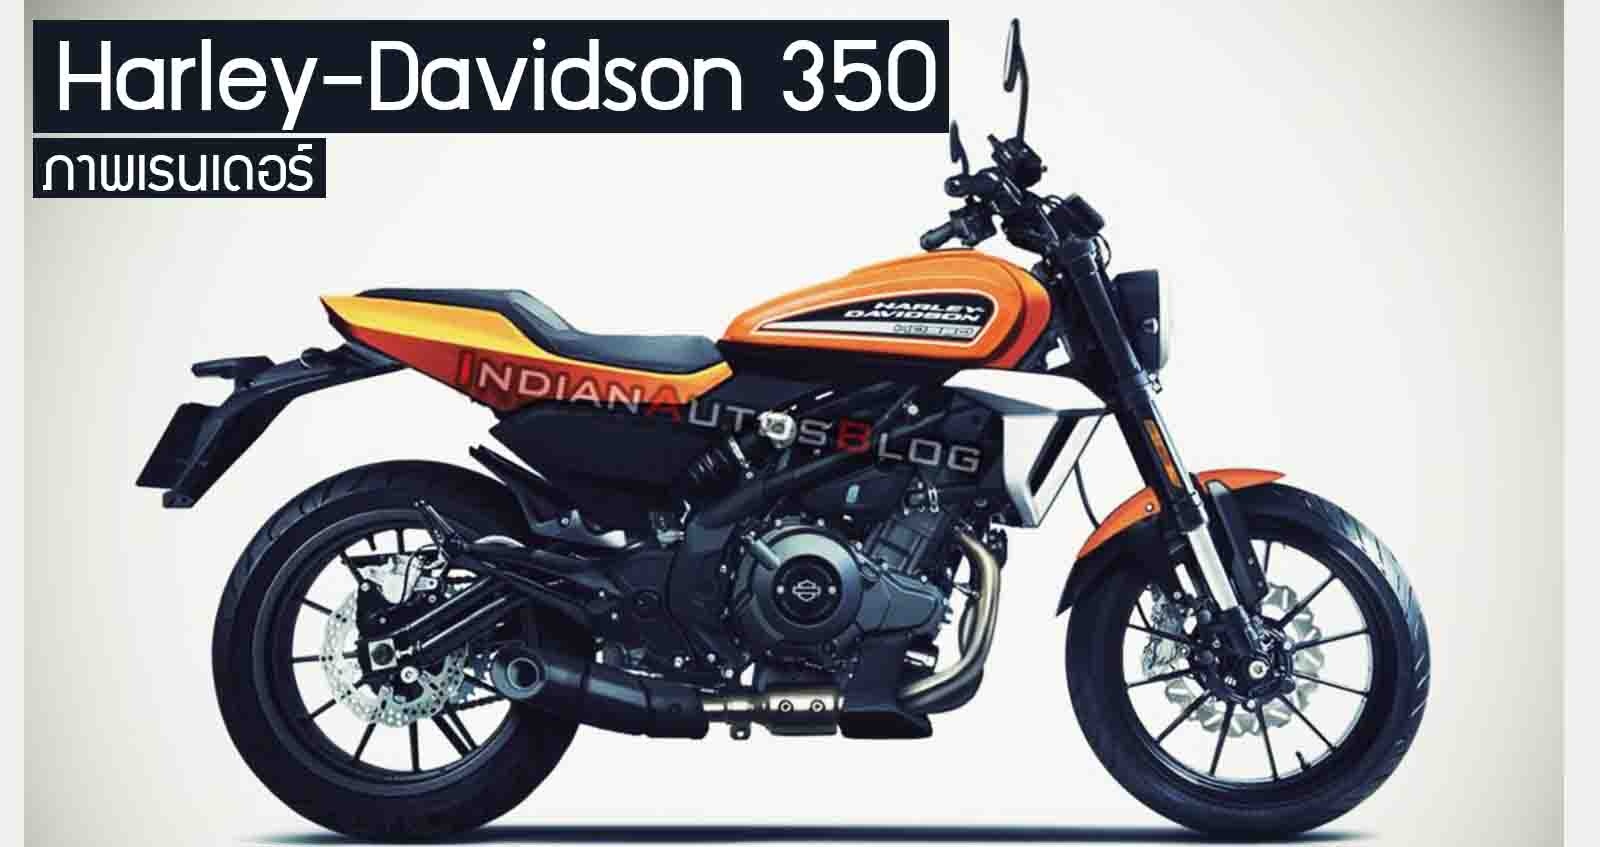 Harley-Davidson 350 ภาพเรนเดอร์